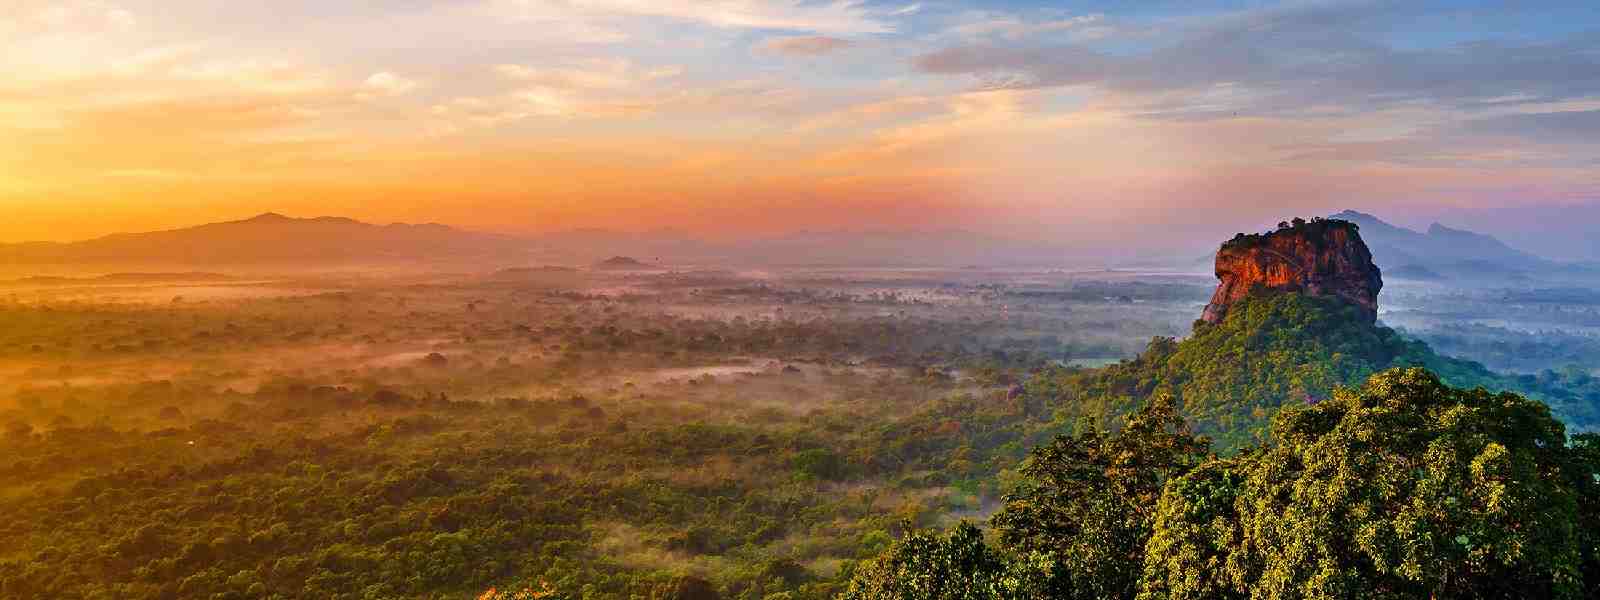 SMH Traveller says Sri Lanka is a MUST visit destination